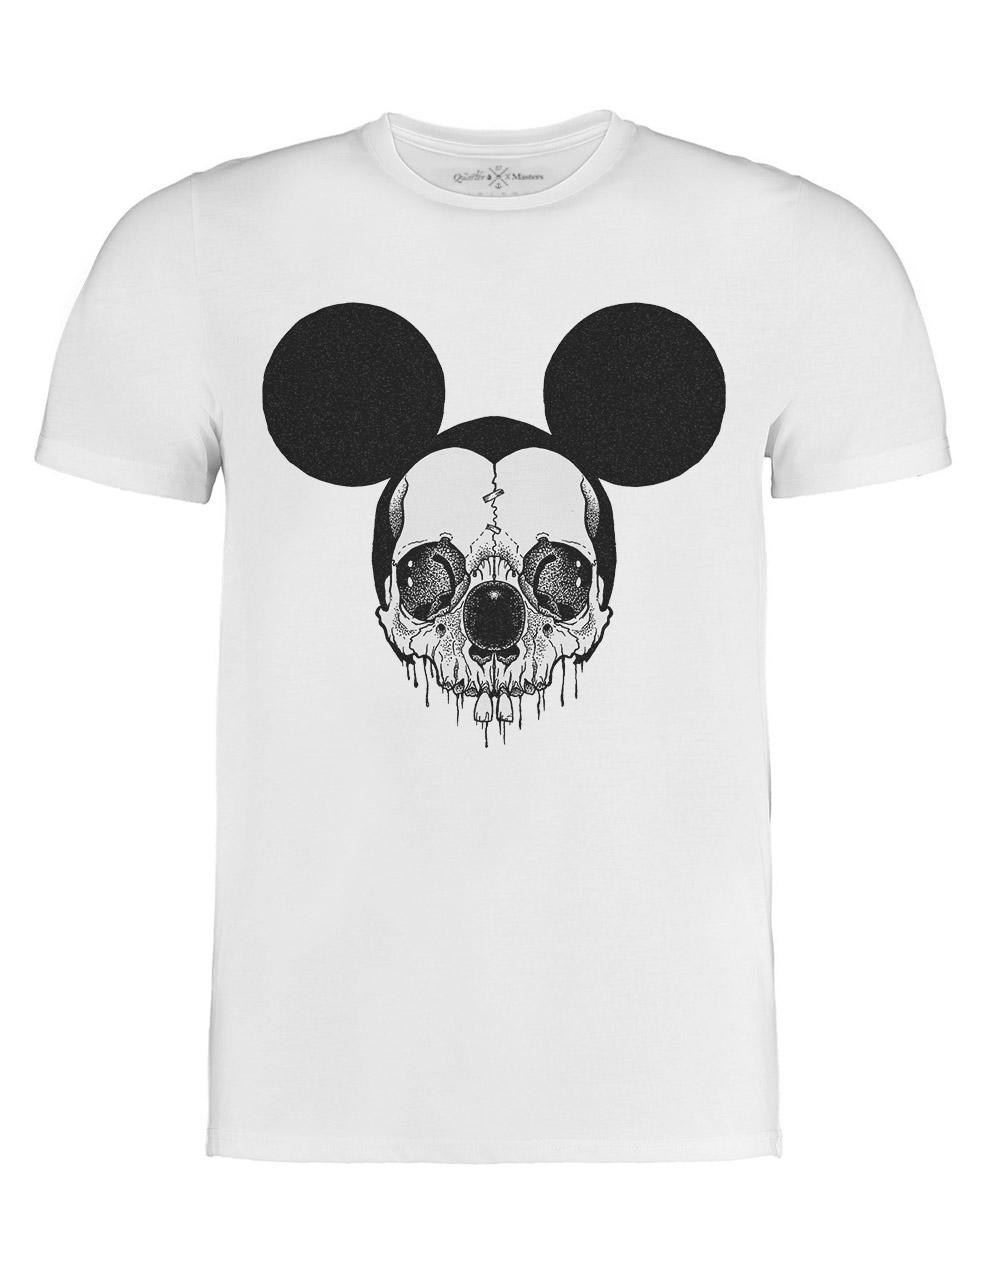 Zombie Mouse T-shirt by Jon MDC